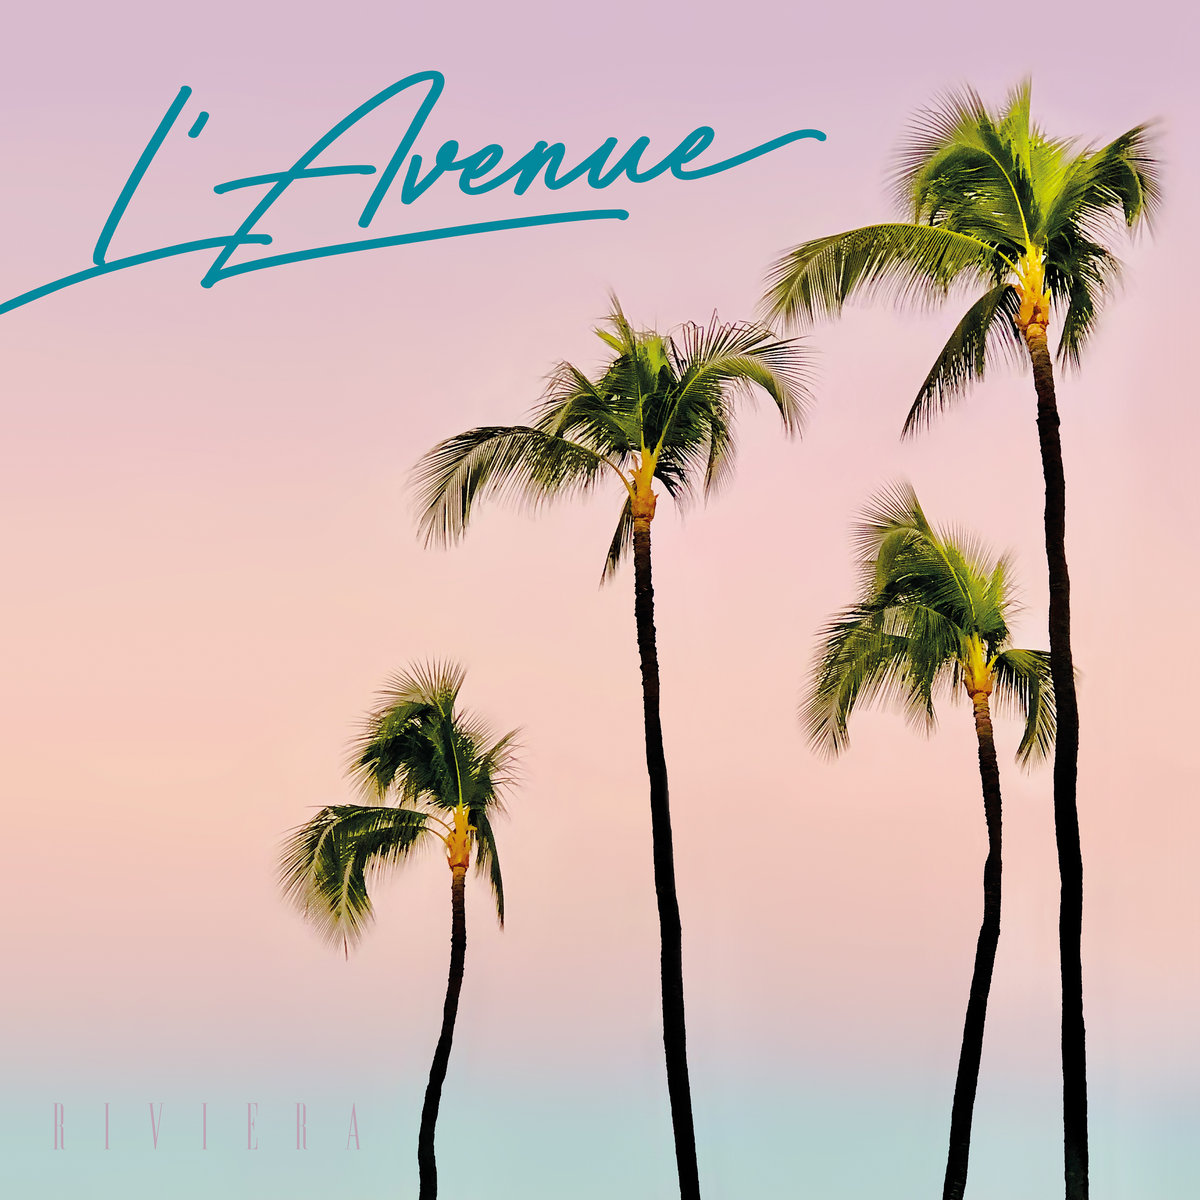 a3636867559 10 - L’Avenue drops new album ‘Riviera’